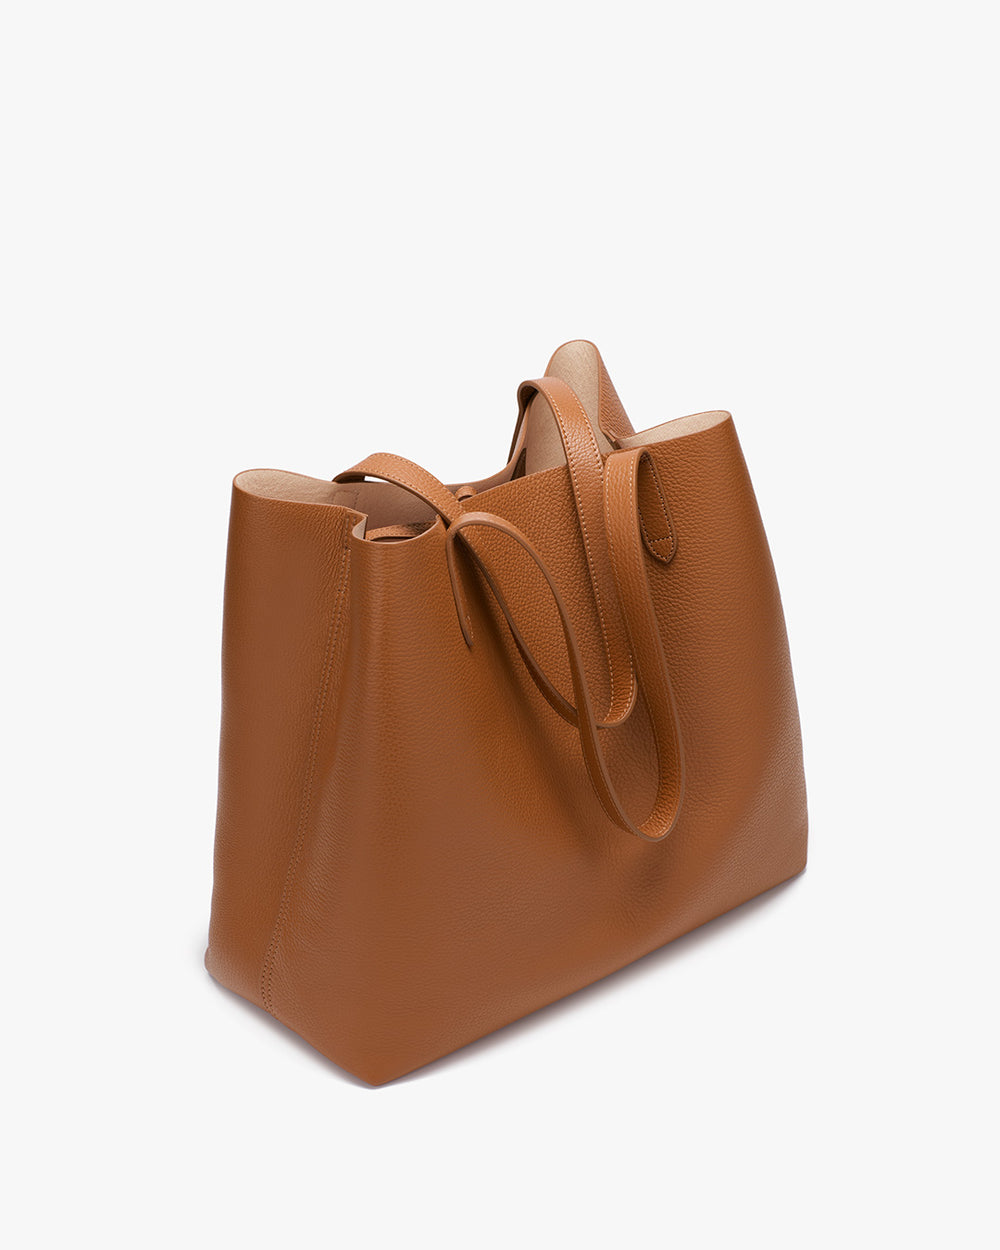 Handbag standing upright on a plain background